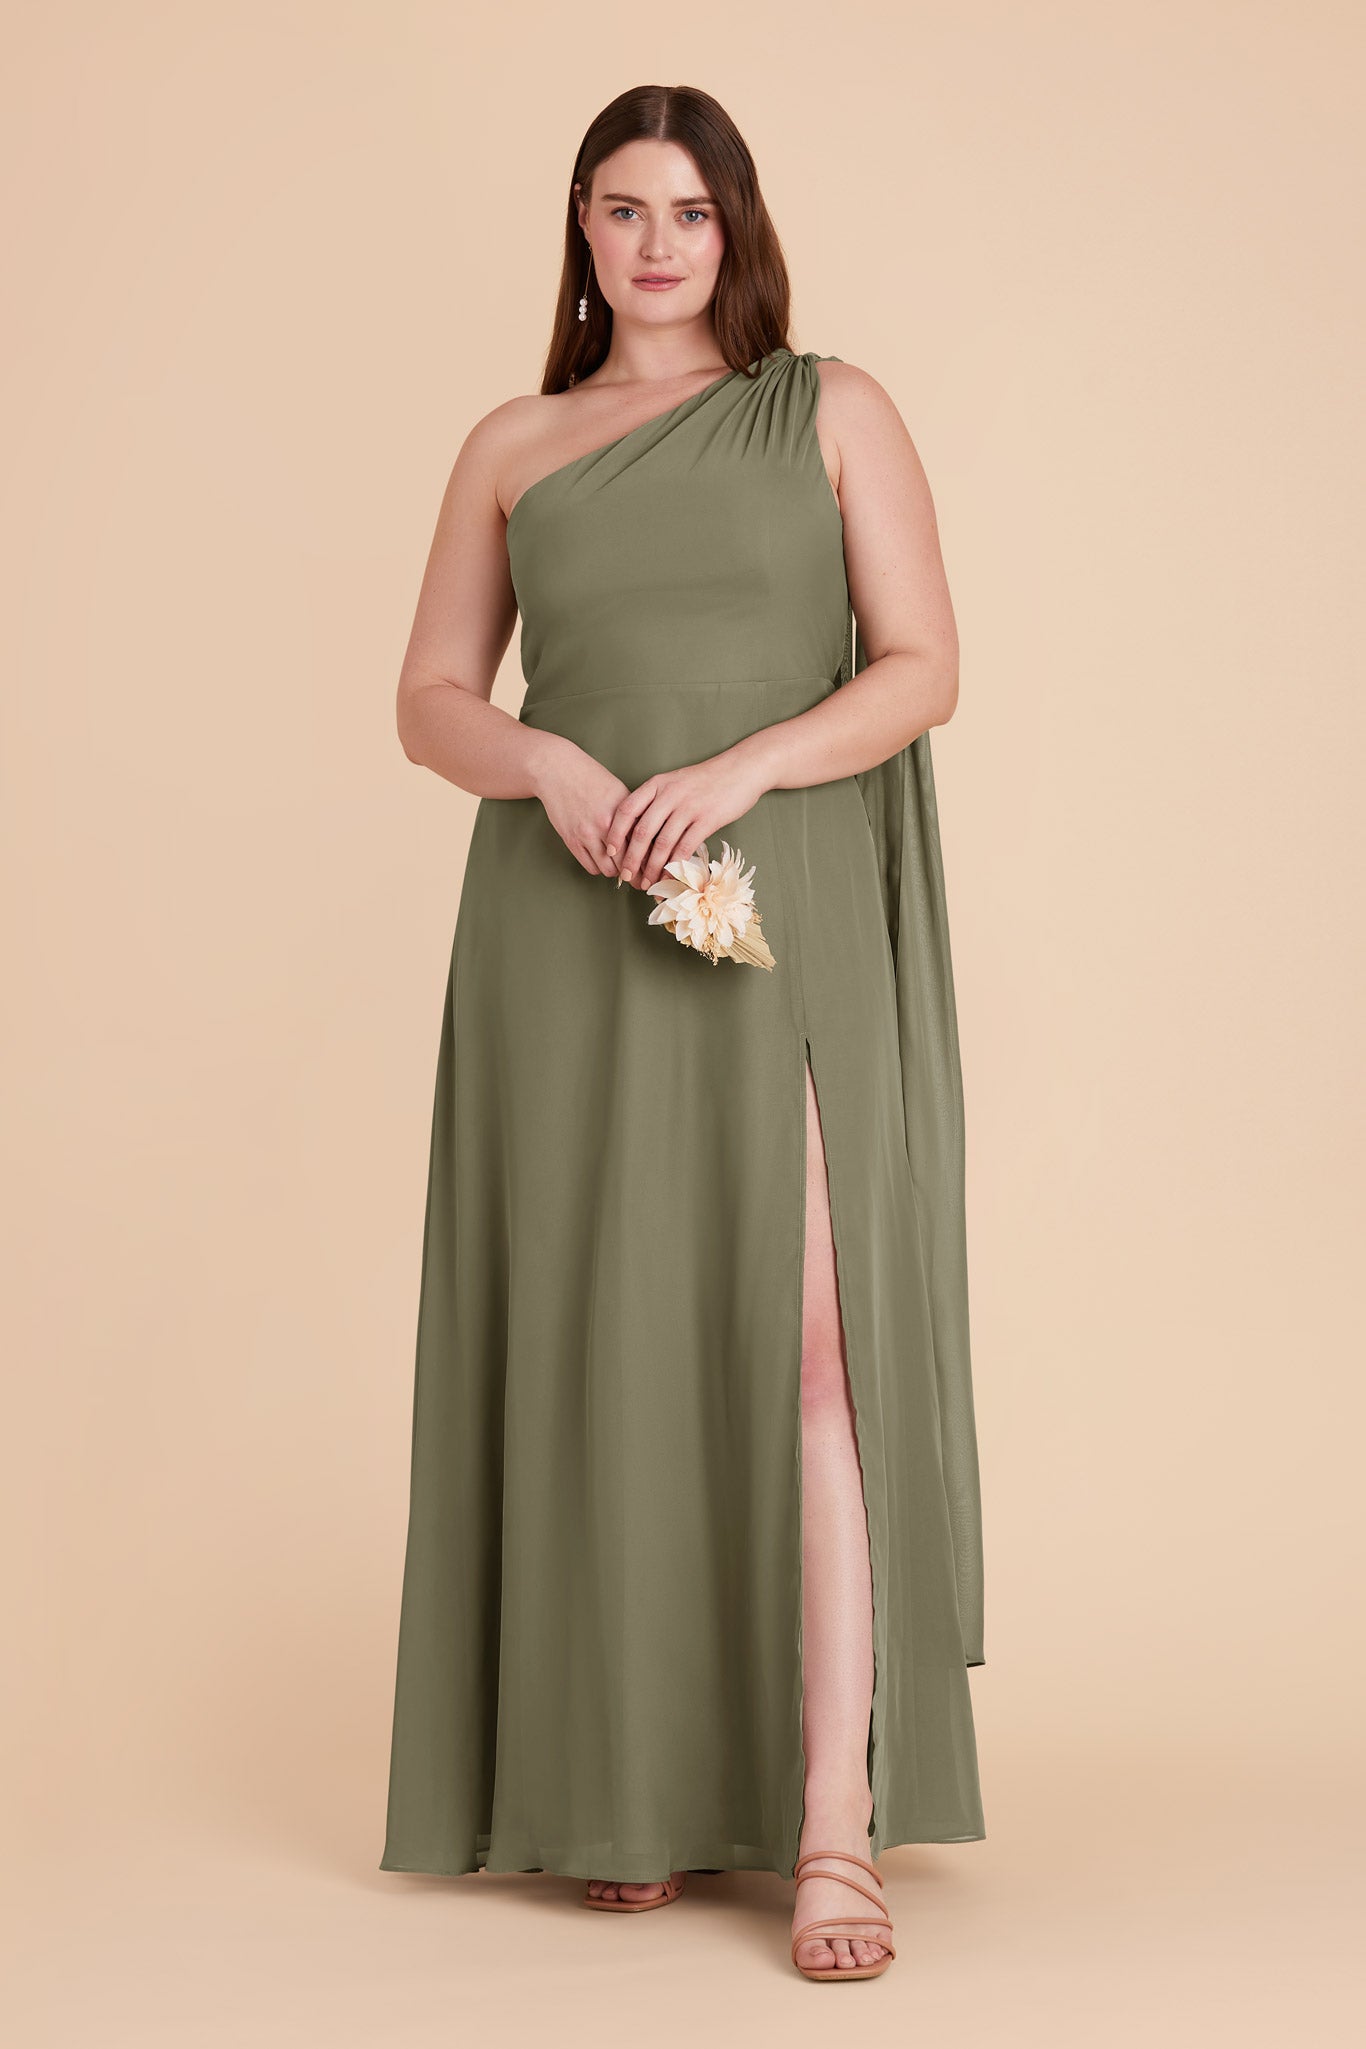 Moss Green Melissa Chiffon Dress by Birdy Grey